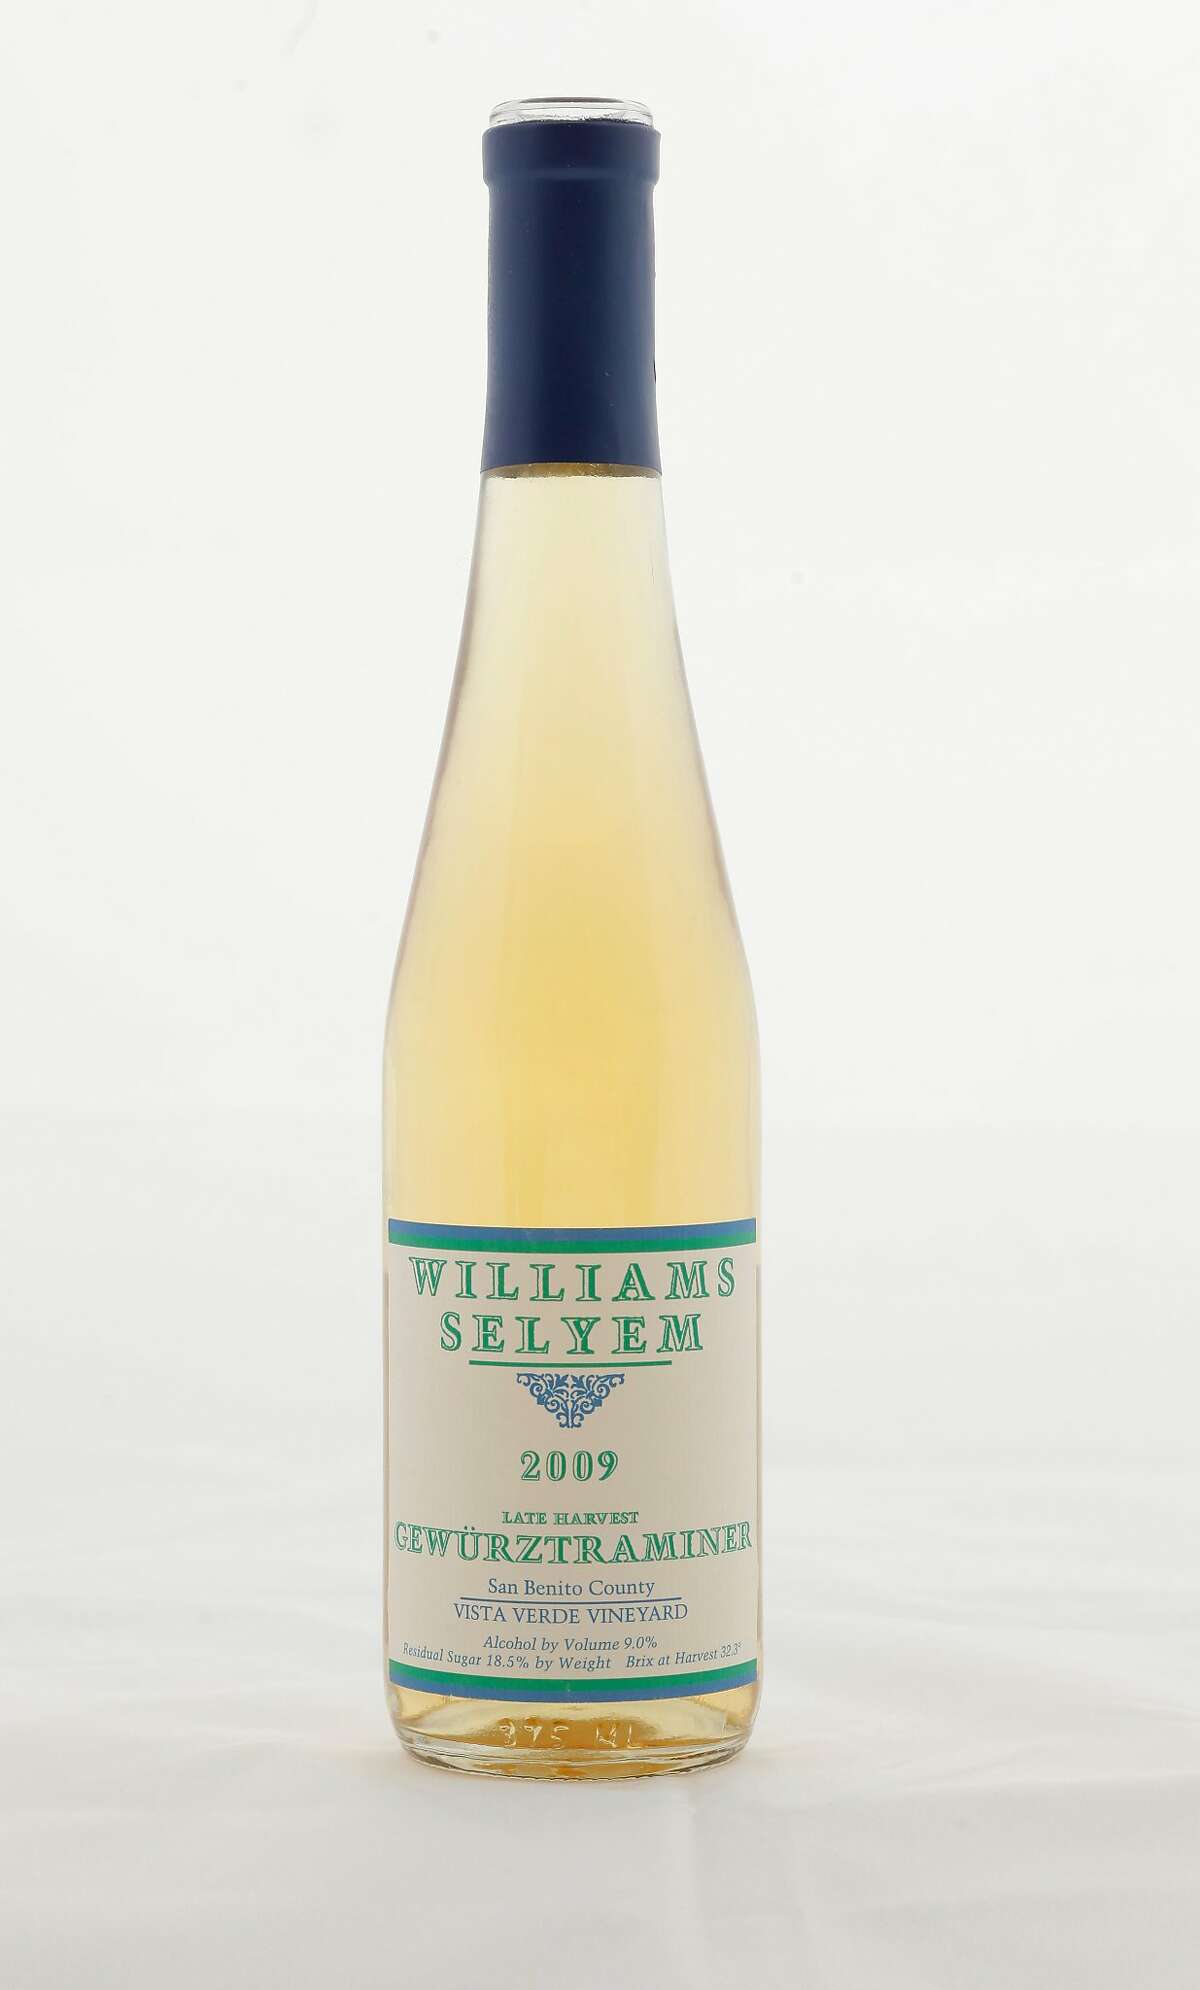 Williams Selyem除了生产黑皮诺(Pinot Noir)之外，还生产其他几种葡萄酒，比如这款晚收的琼瑶浆(Gewurztraminer)。